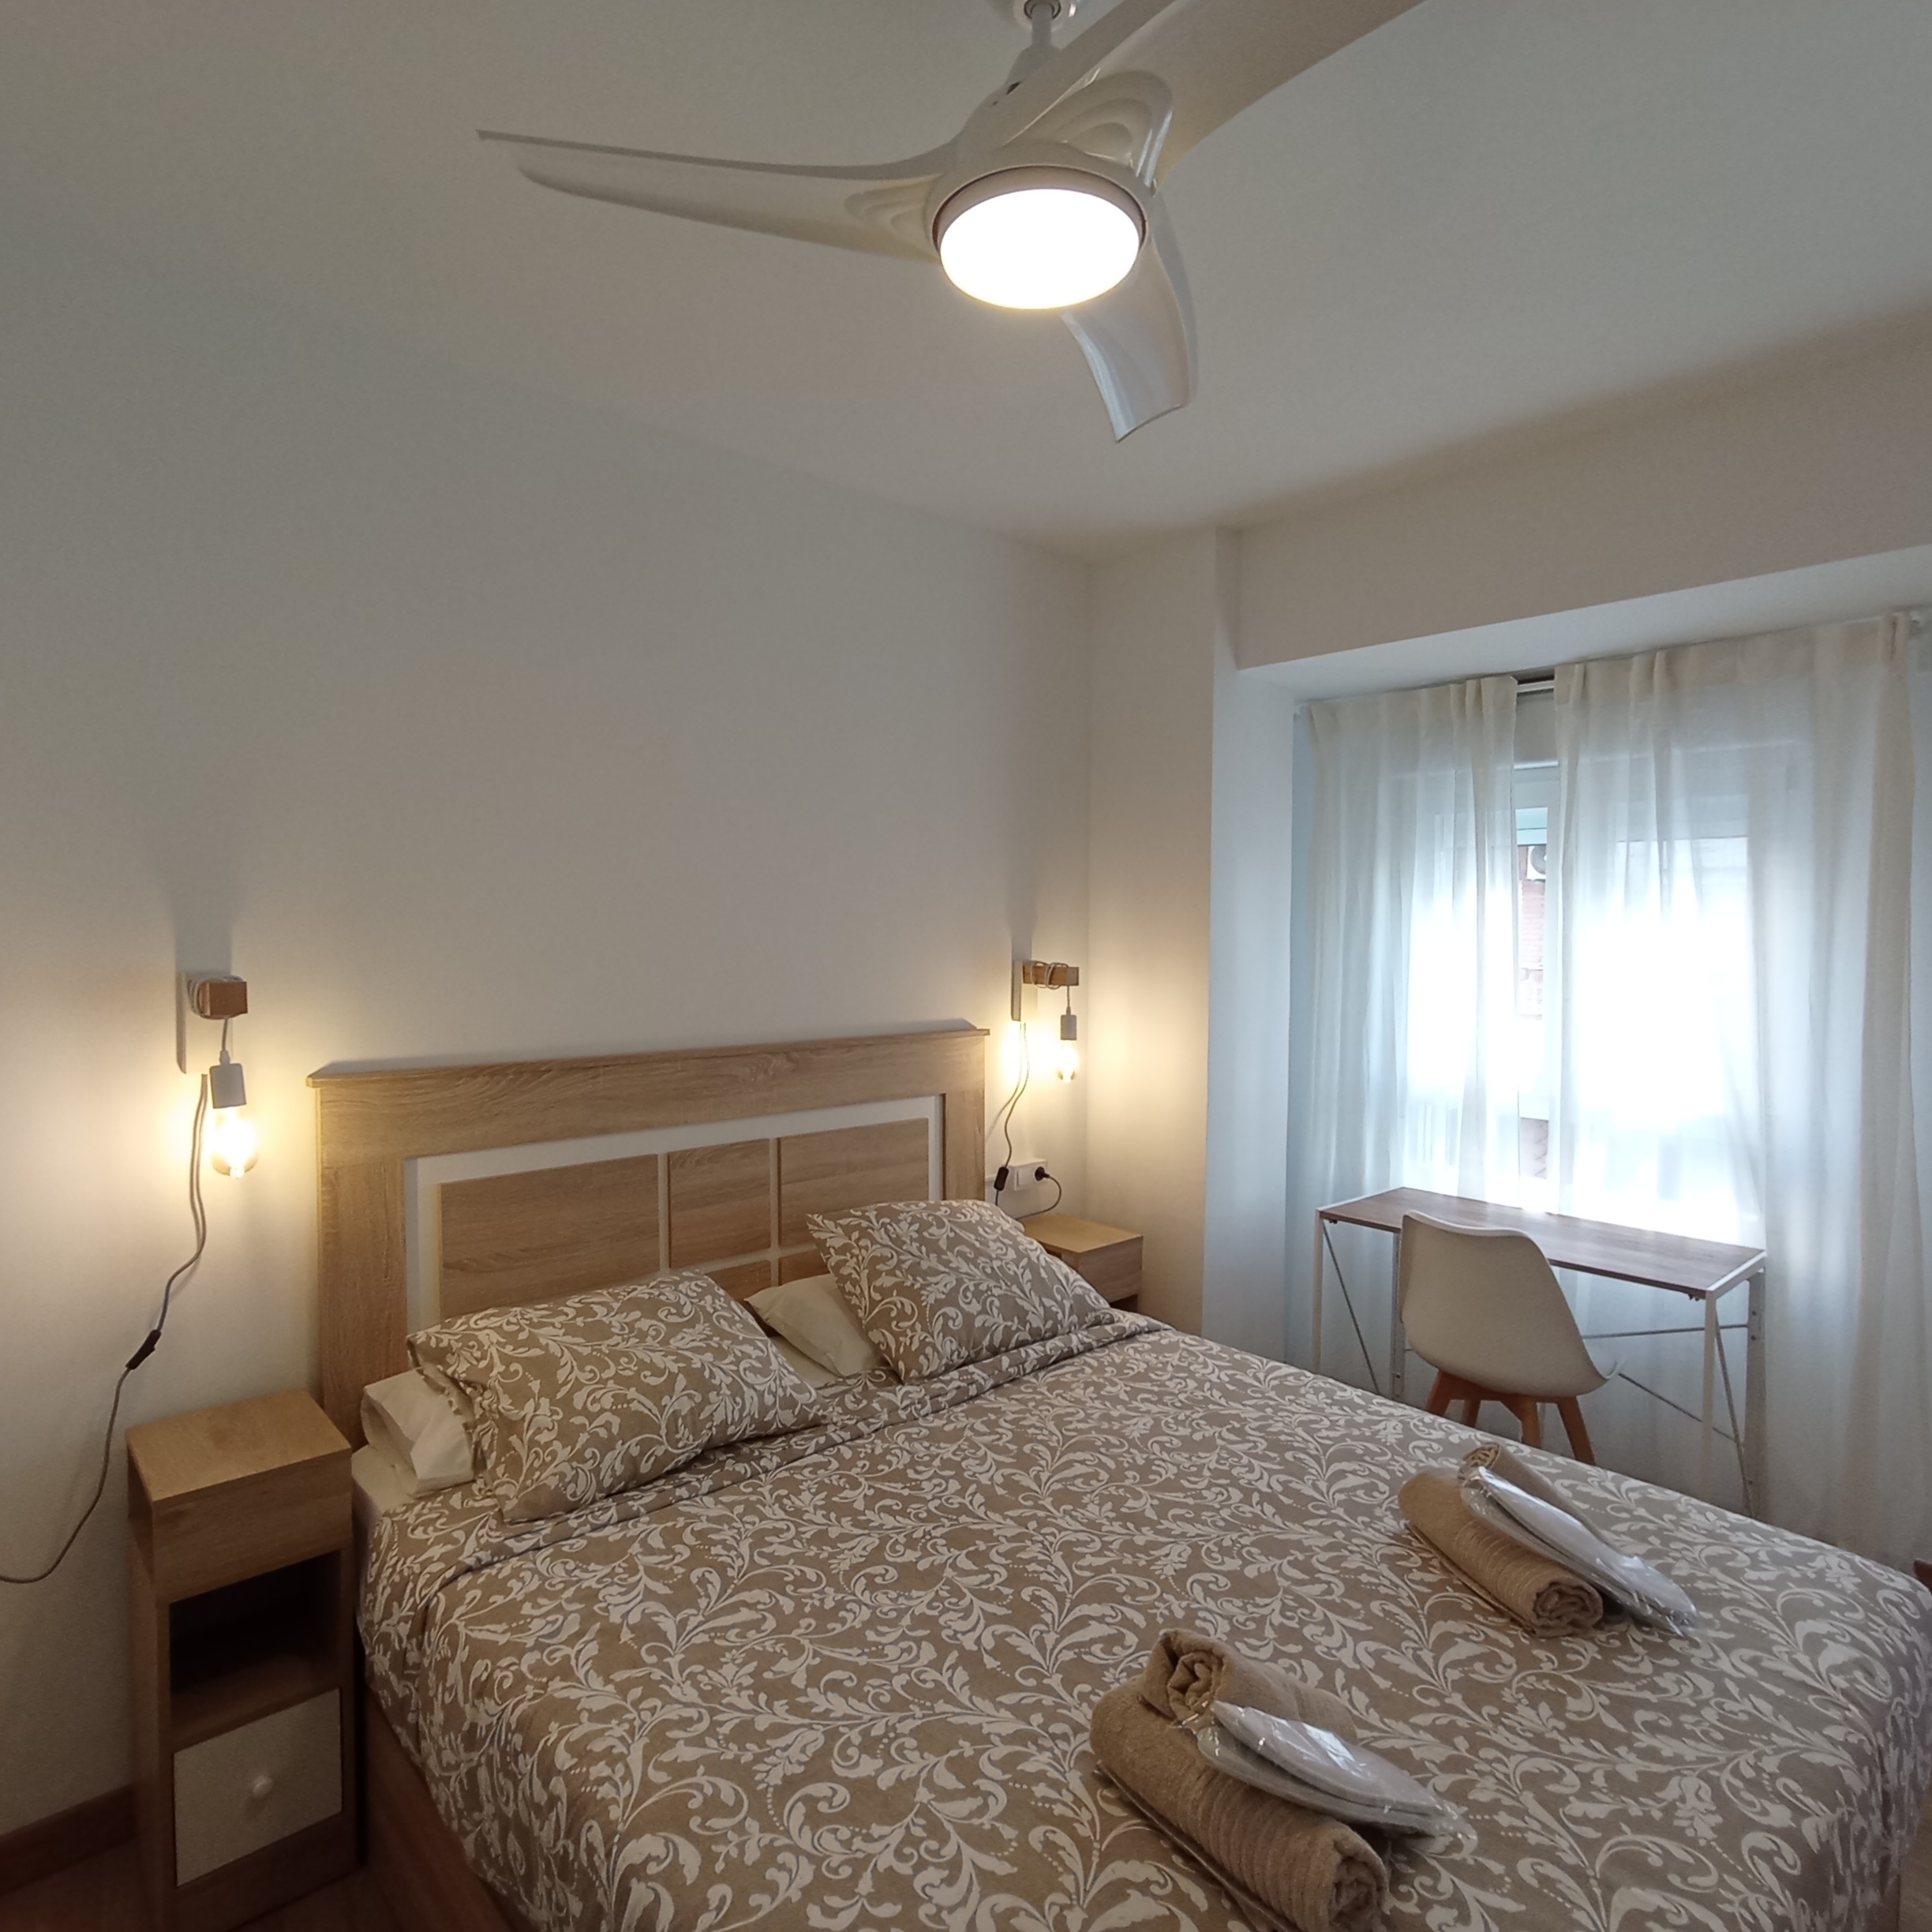 Trafalgar - 3 Bedroom apartment for rent in Valencia double bedroom 3